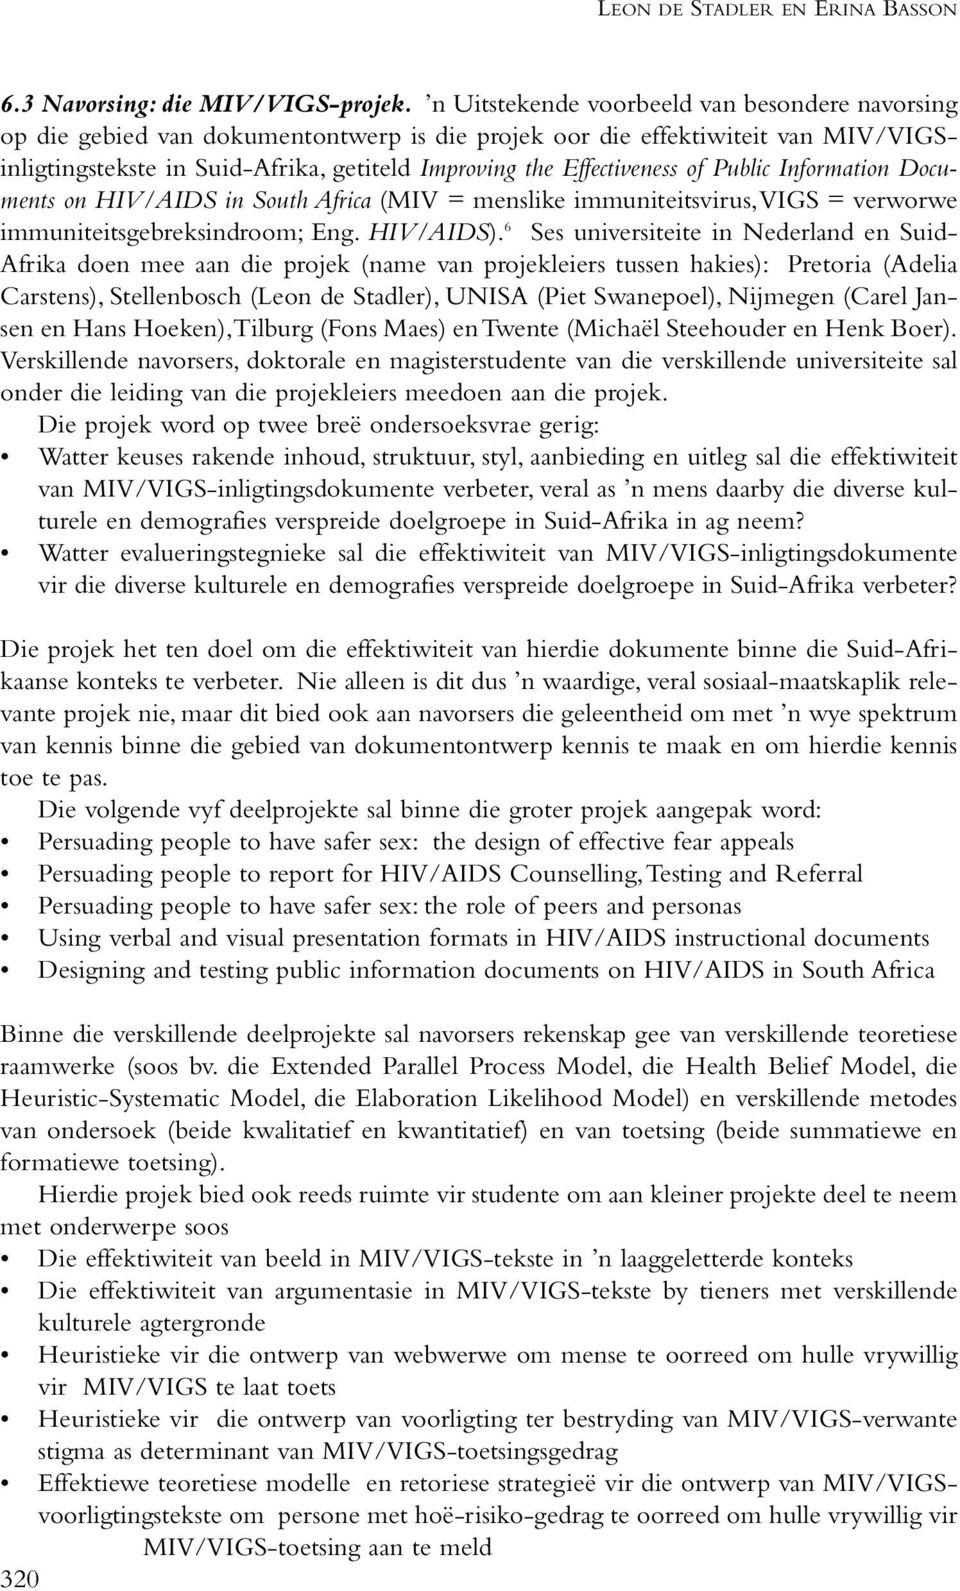 of Public Information Documents on HIV/AIDS in South Africa (MIV = menslike immuniteitsvirus,vigs = verworwe immuniteitsgebreksindroom; Eng. HIV/AIDS).